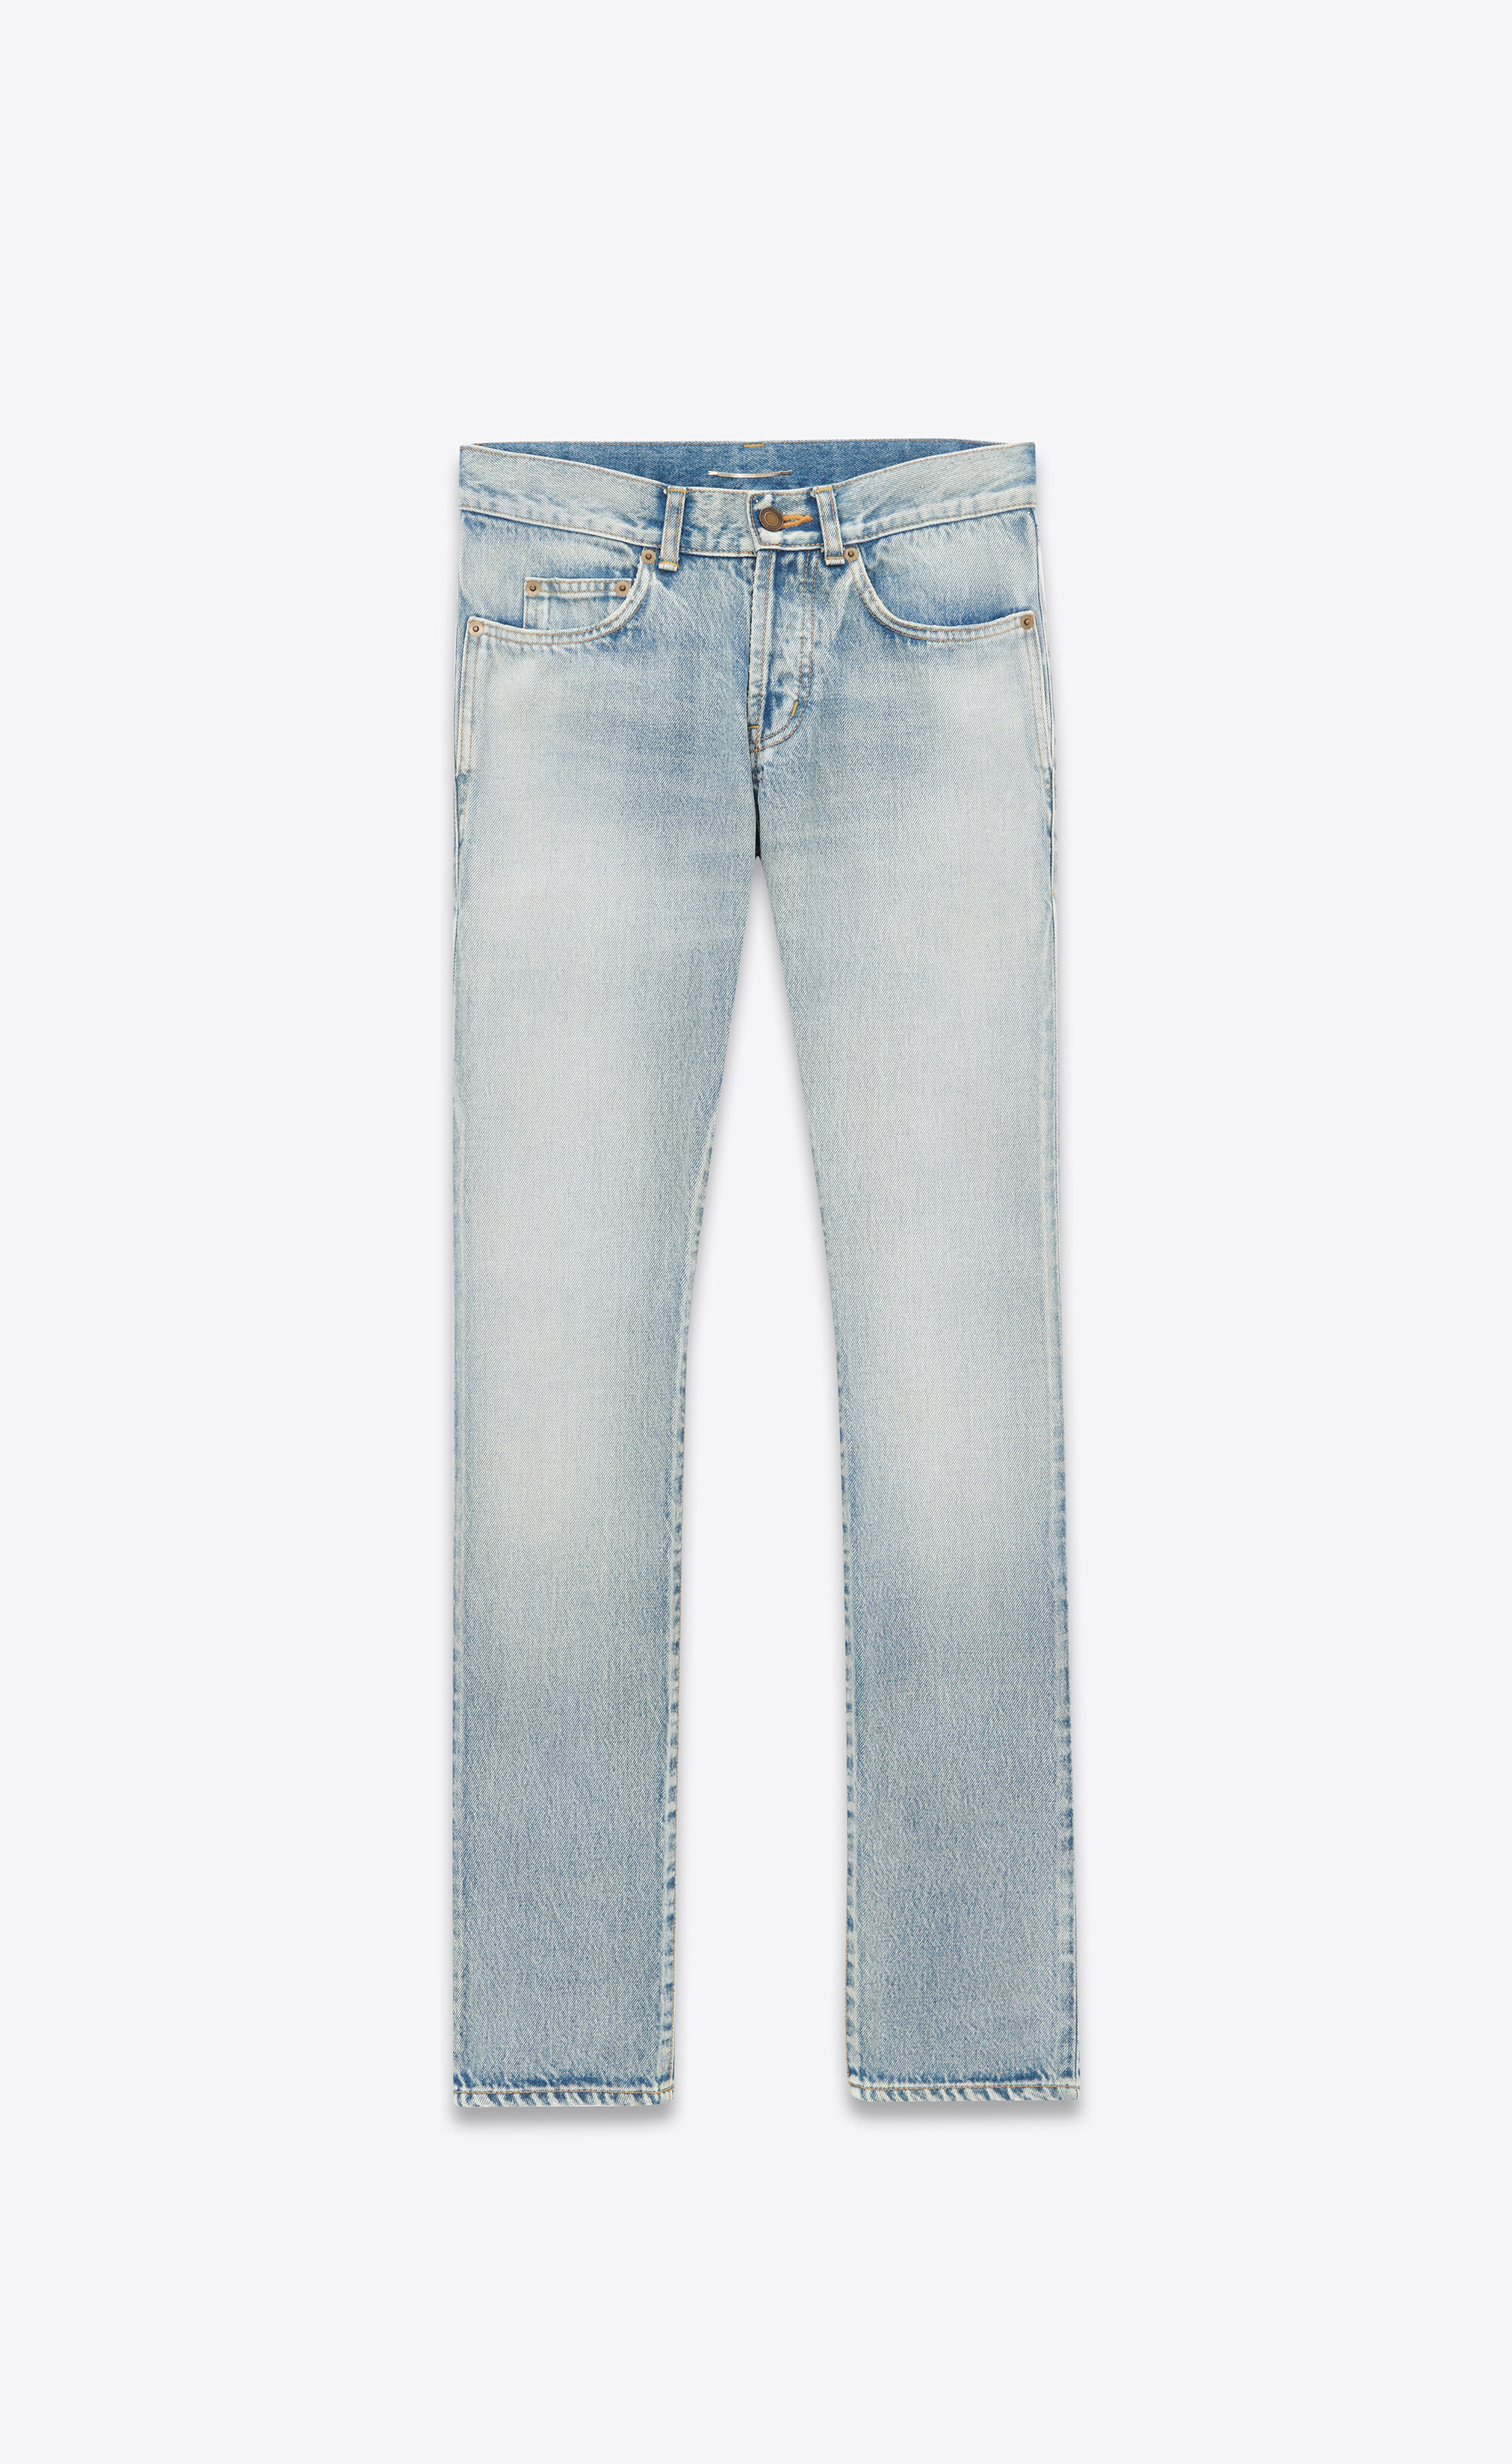 Slim-fit jeans in SANTA MONICA blue denim, Saint Laurent